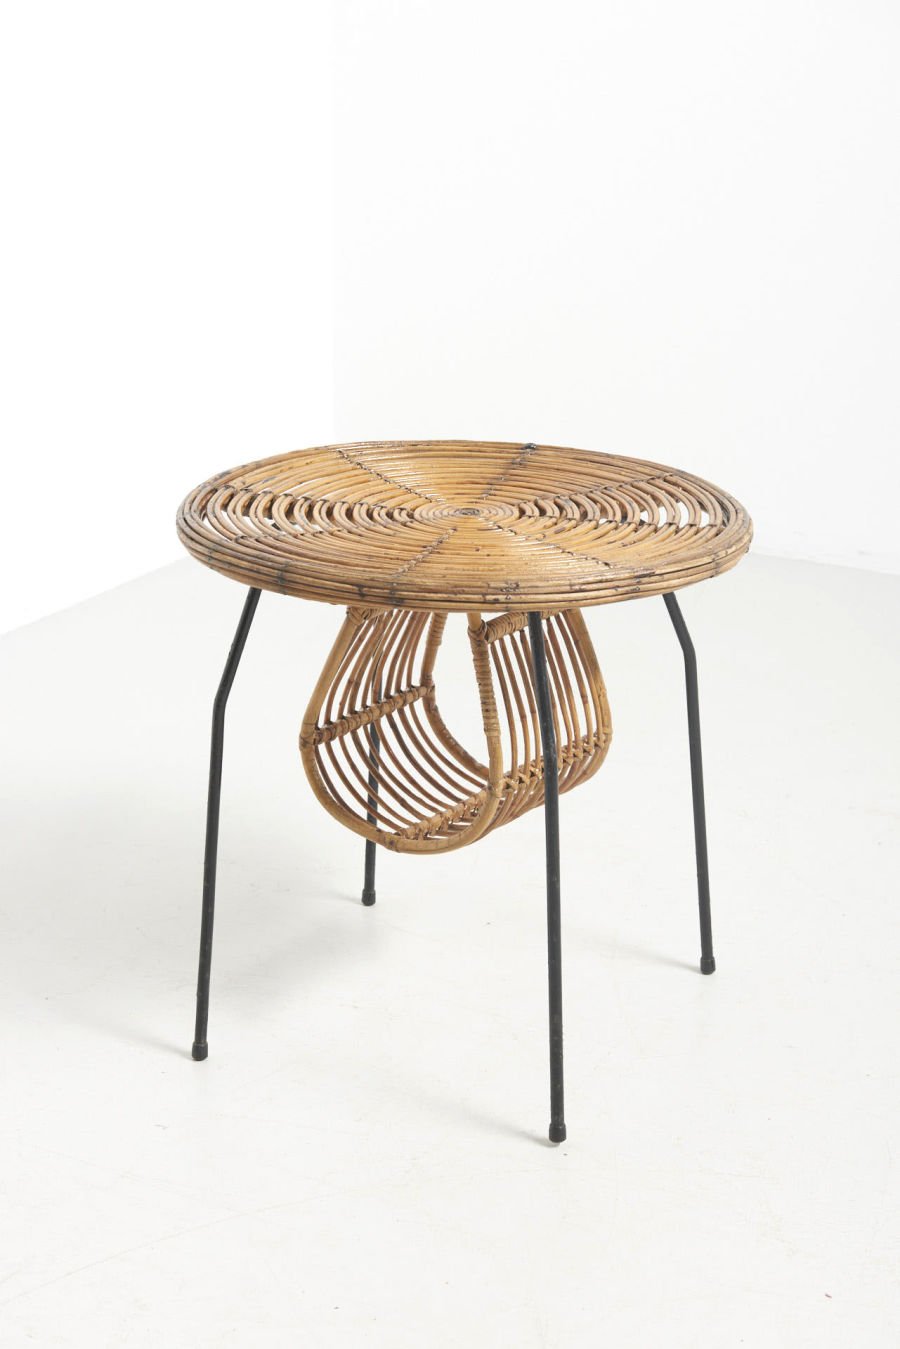 modestfurniture-vintage-2218-italian-rattan-set-chairs-side-table12